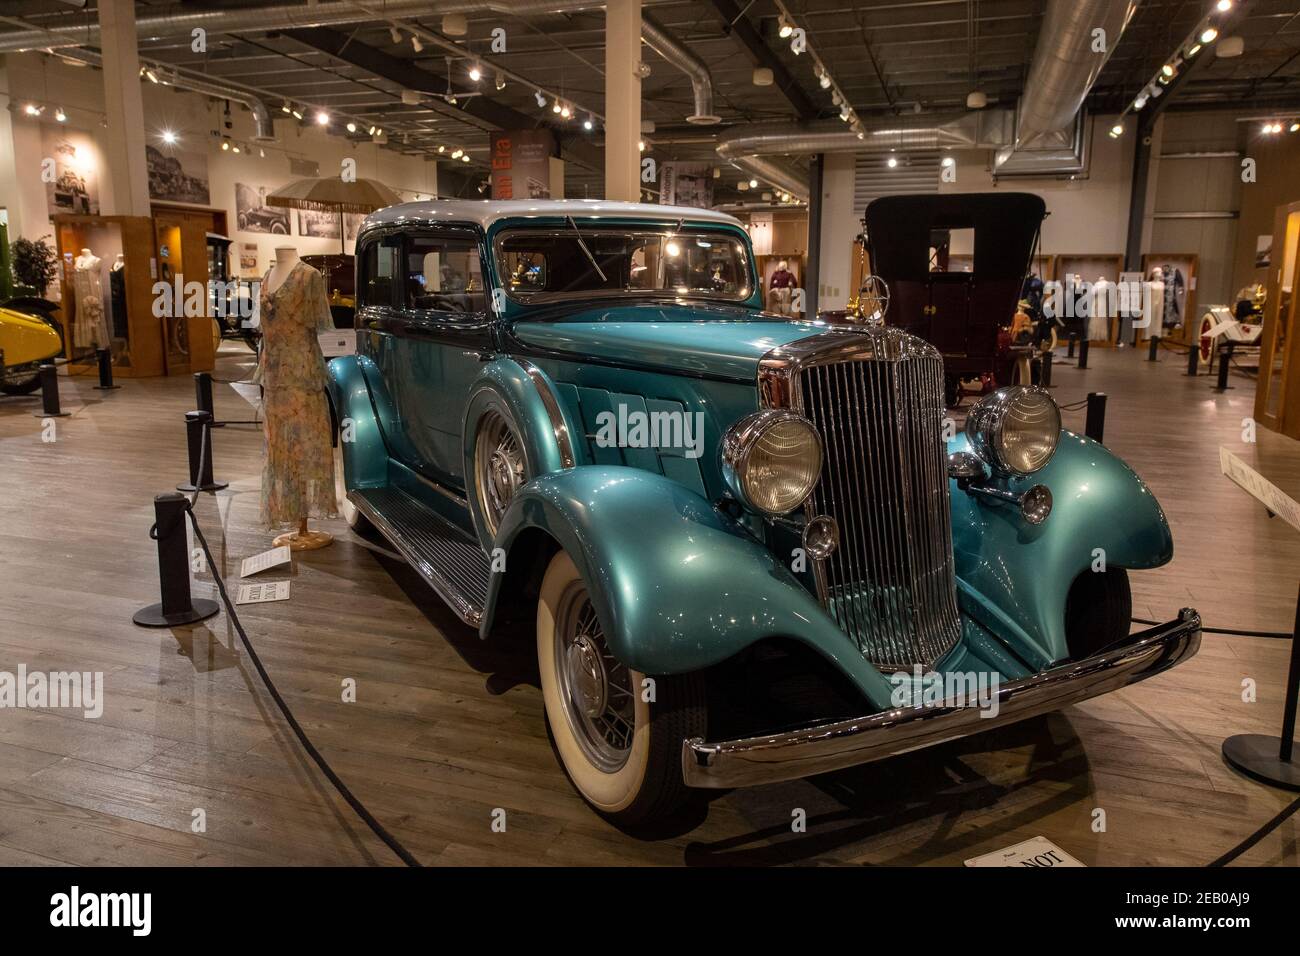 Fountainhead Antique Auto Museum in Fairbanks, Alaska Stock Photo